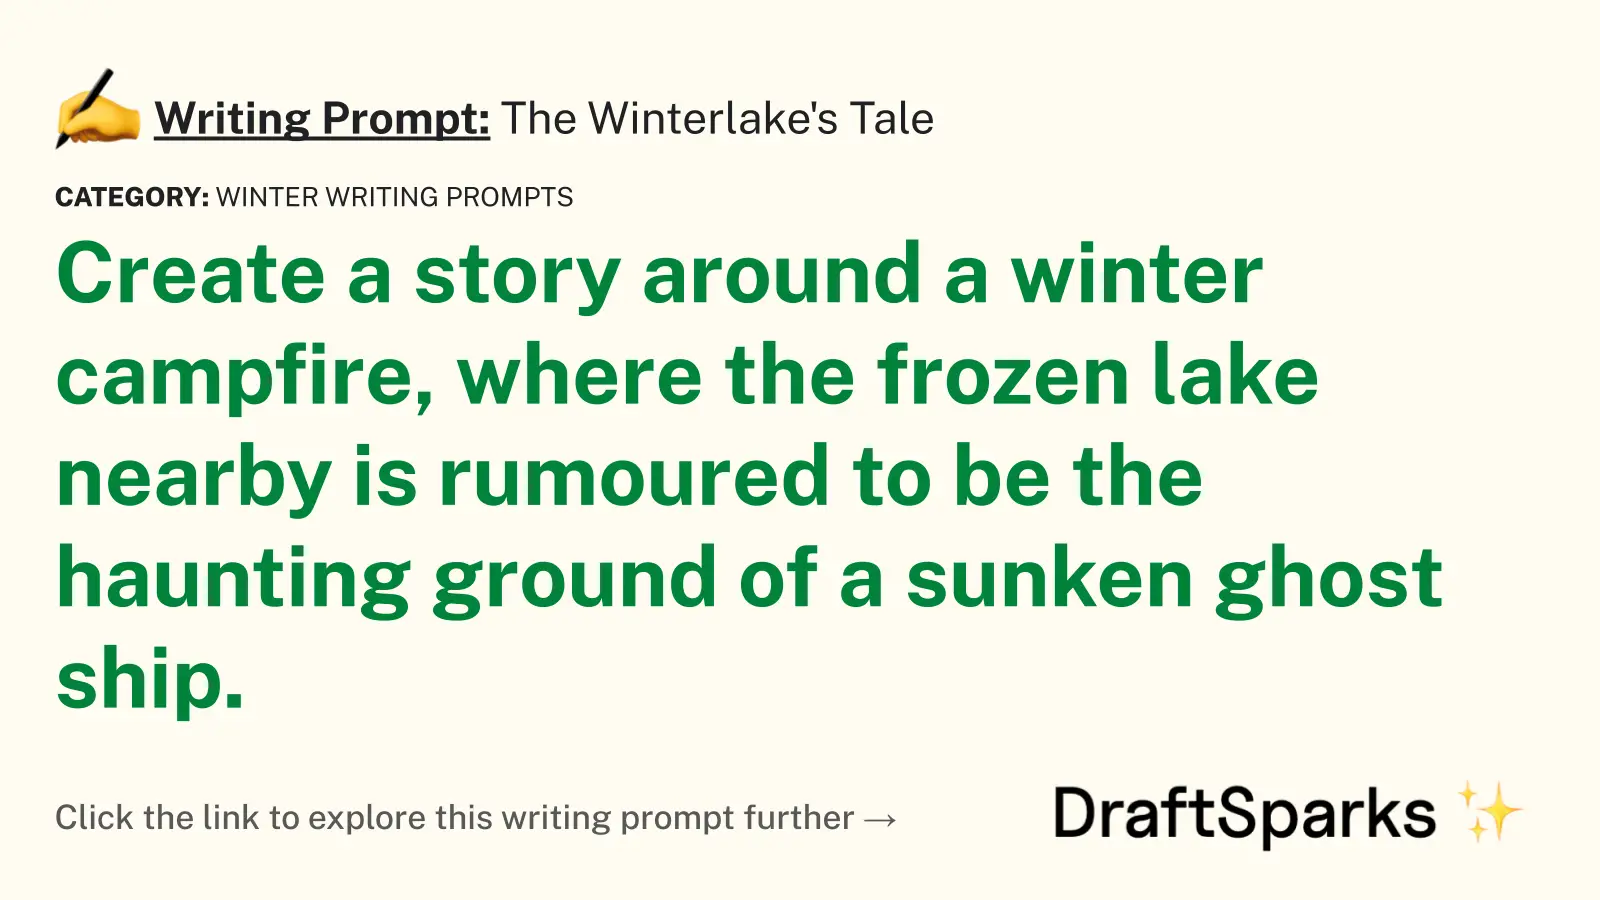 The Winterlake’s Tale